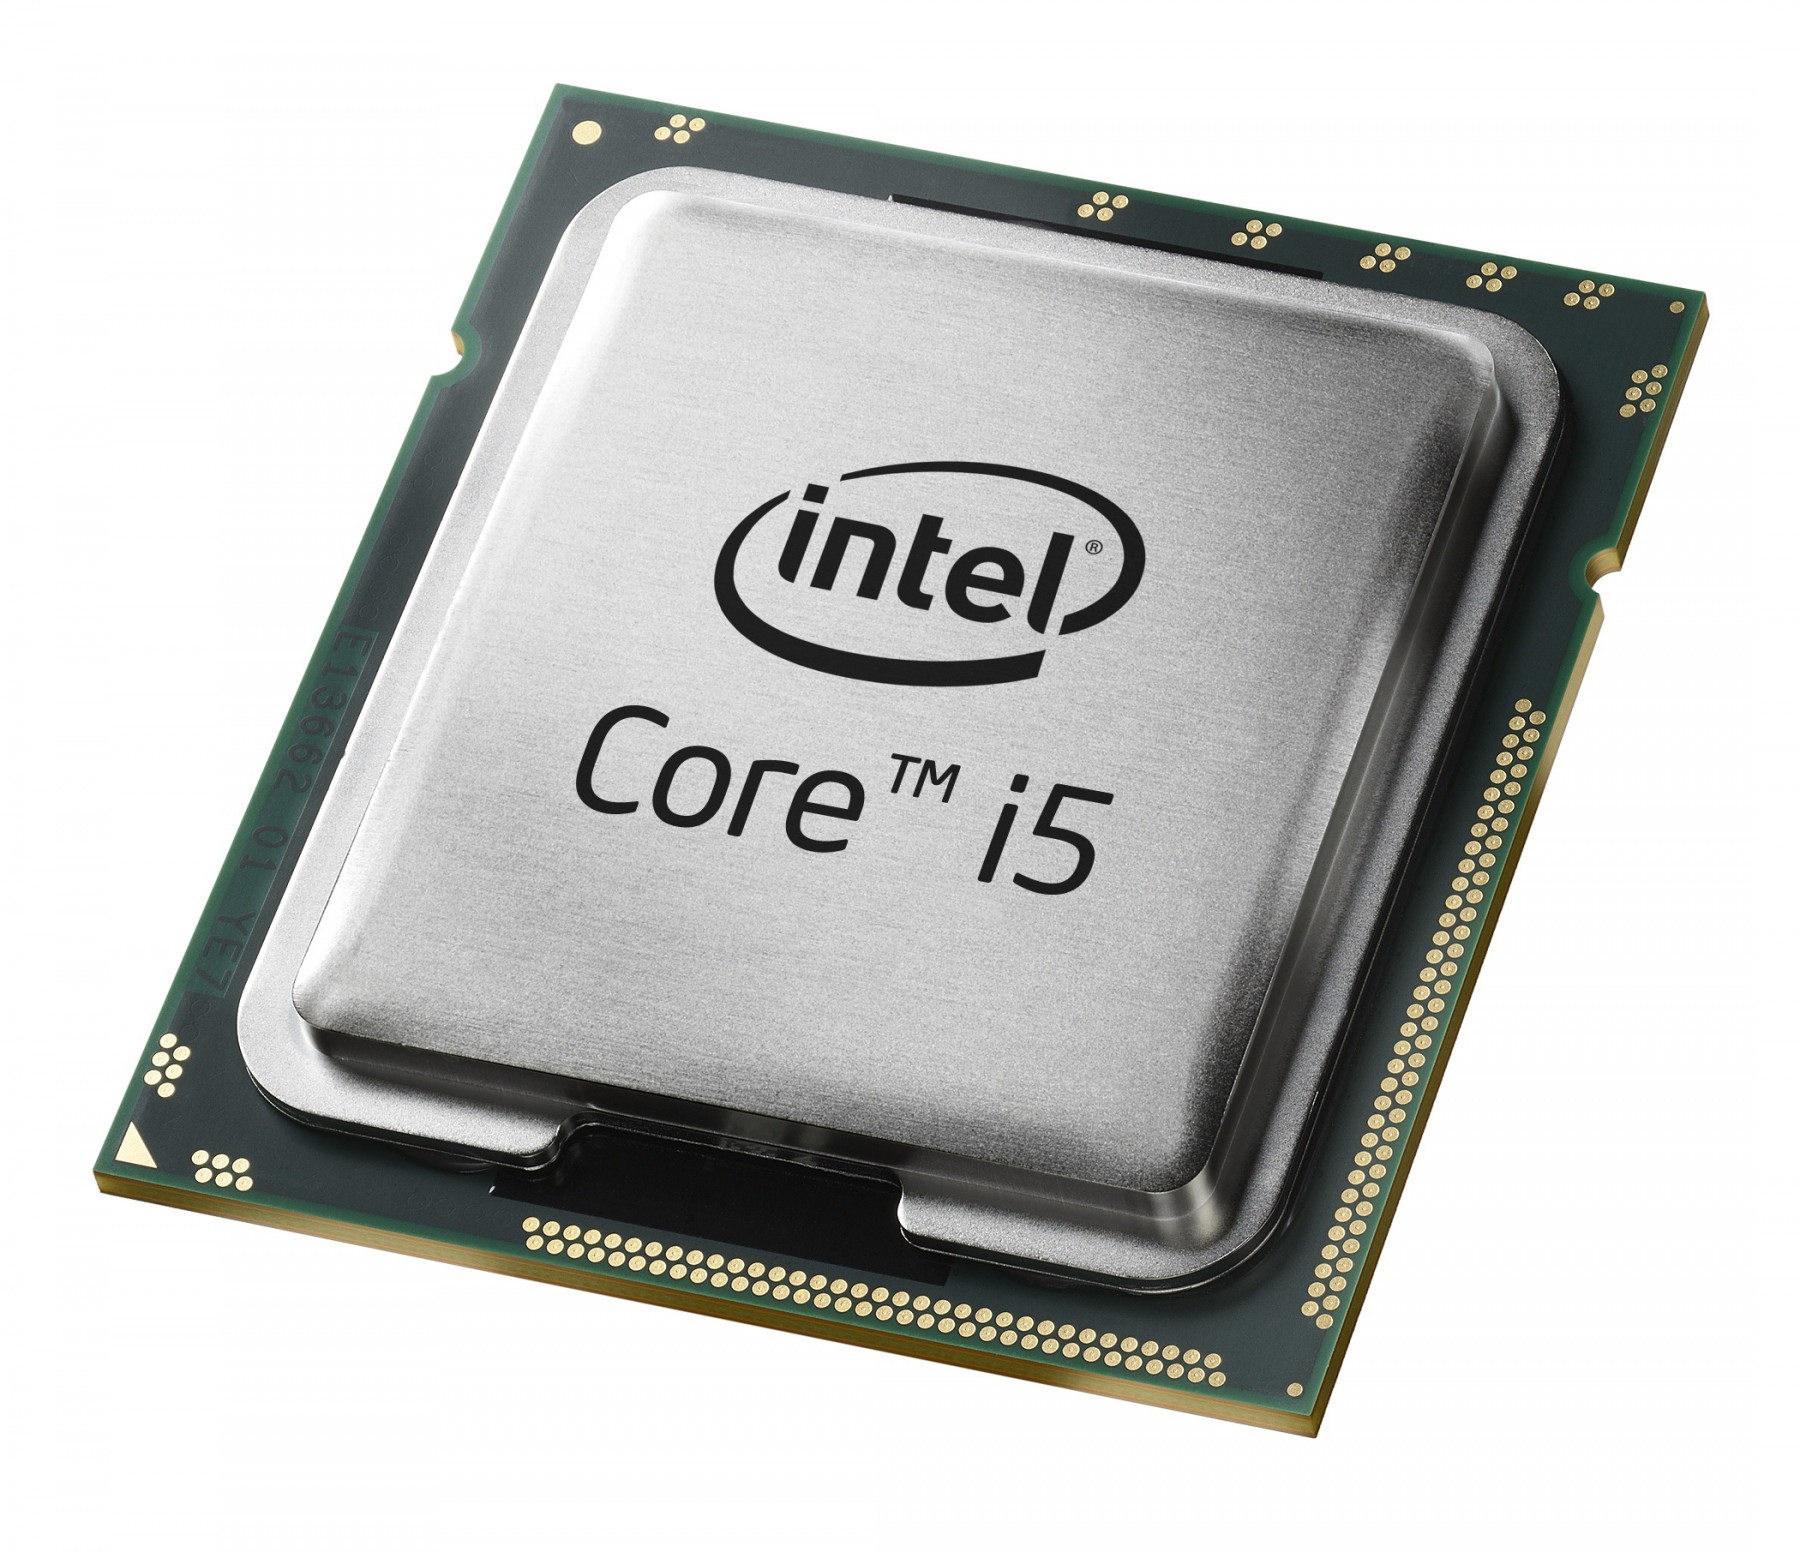 Onderzoek offset Aankondiging Intel Core i5-2450M SR0CH 2.5Ghz 5GT/s Socket G2 Processor